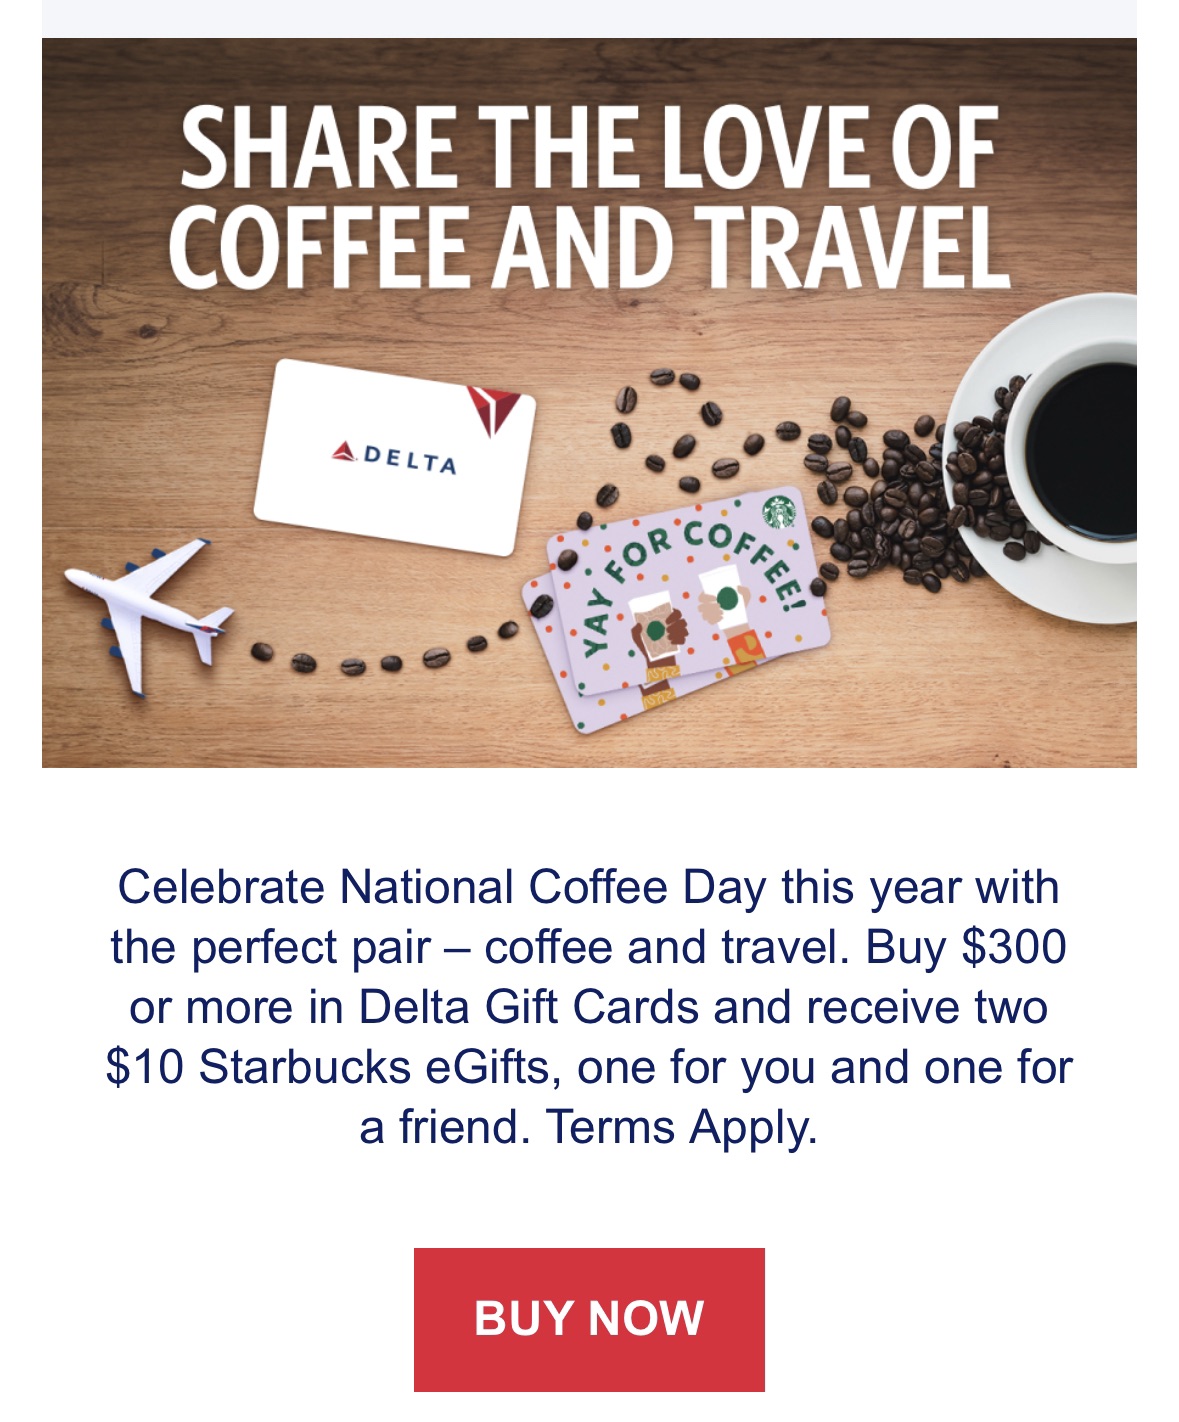 Delta Gift Cards by CashStar